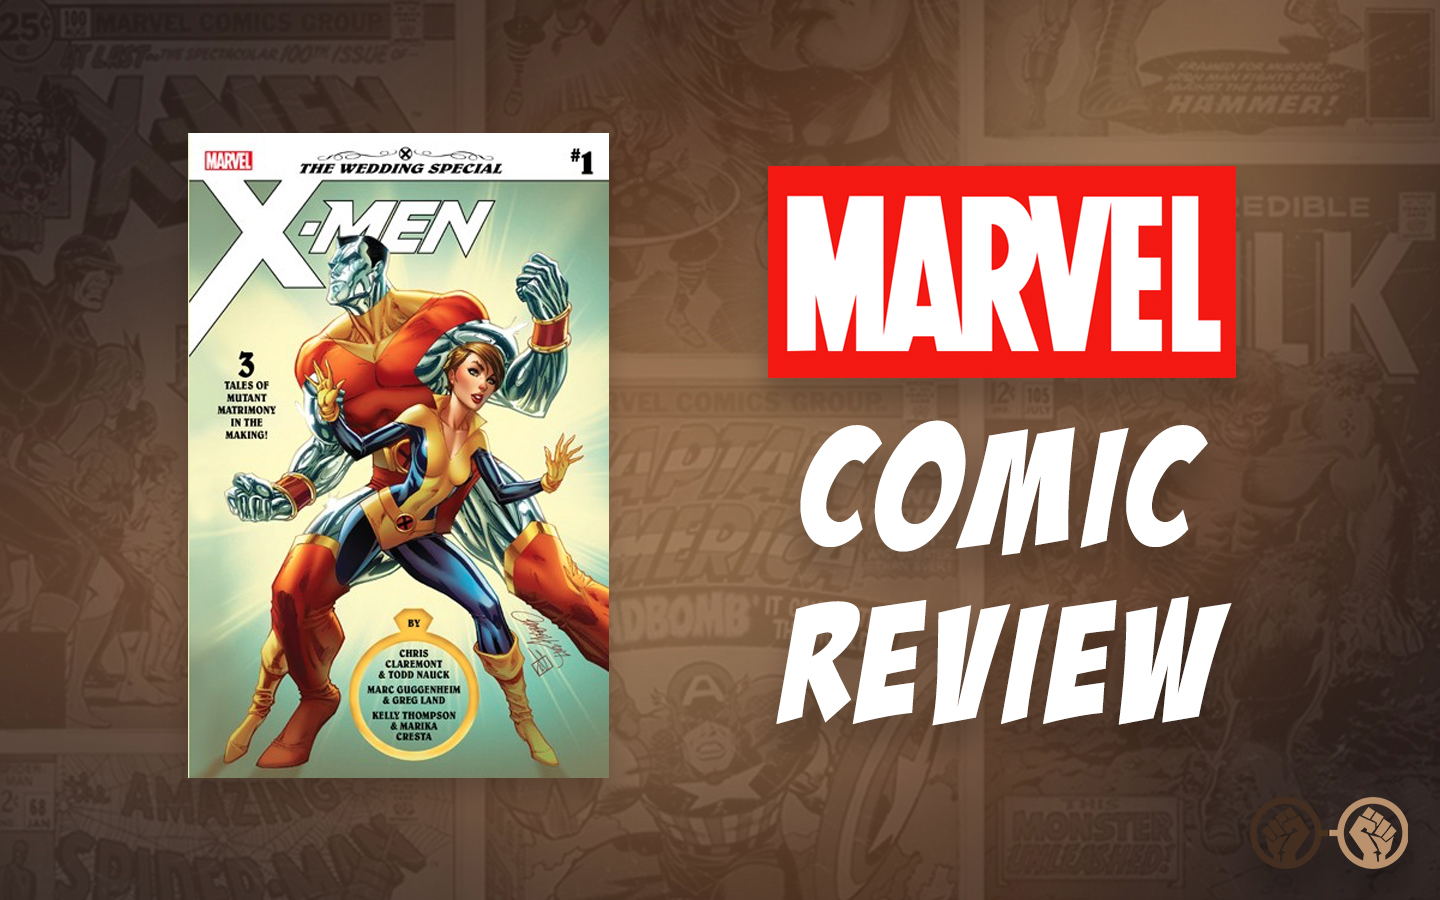 GOC Comic Review: X-men – The Wedding Special #1